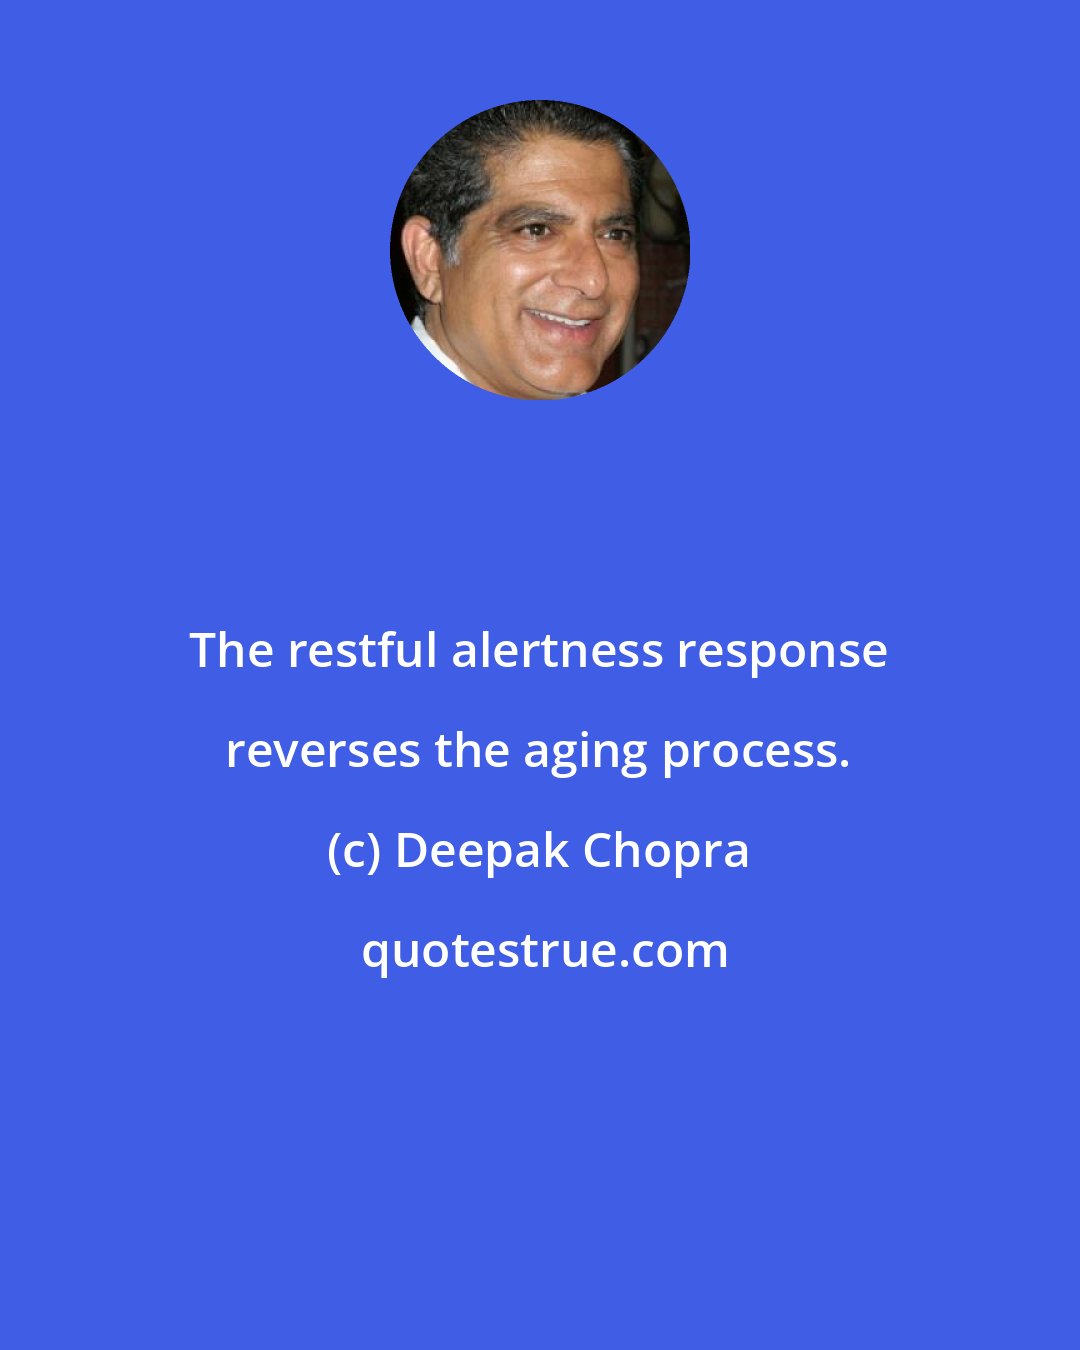 Deepak Chopra: The restful alertness response reverses the aging process.